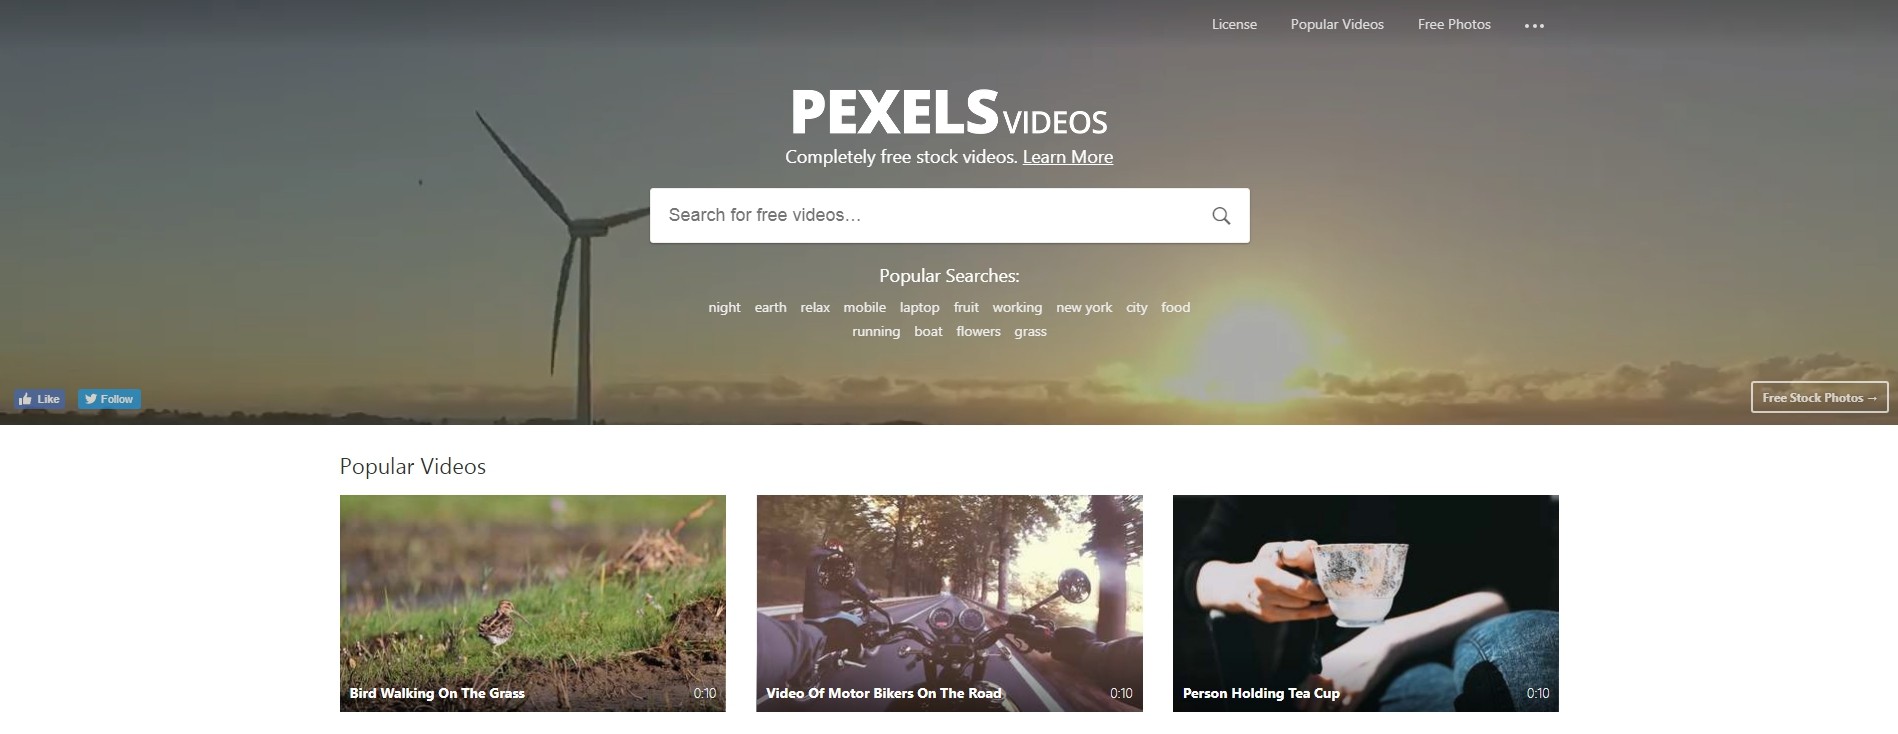 Free stock videos – Pexels Videos